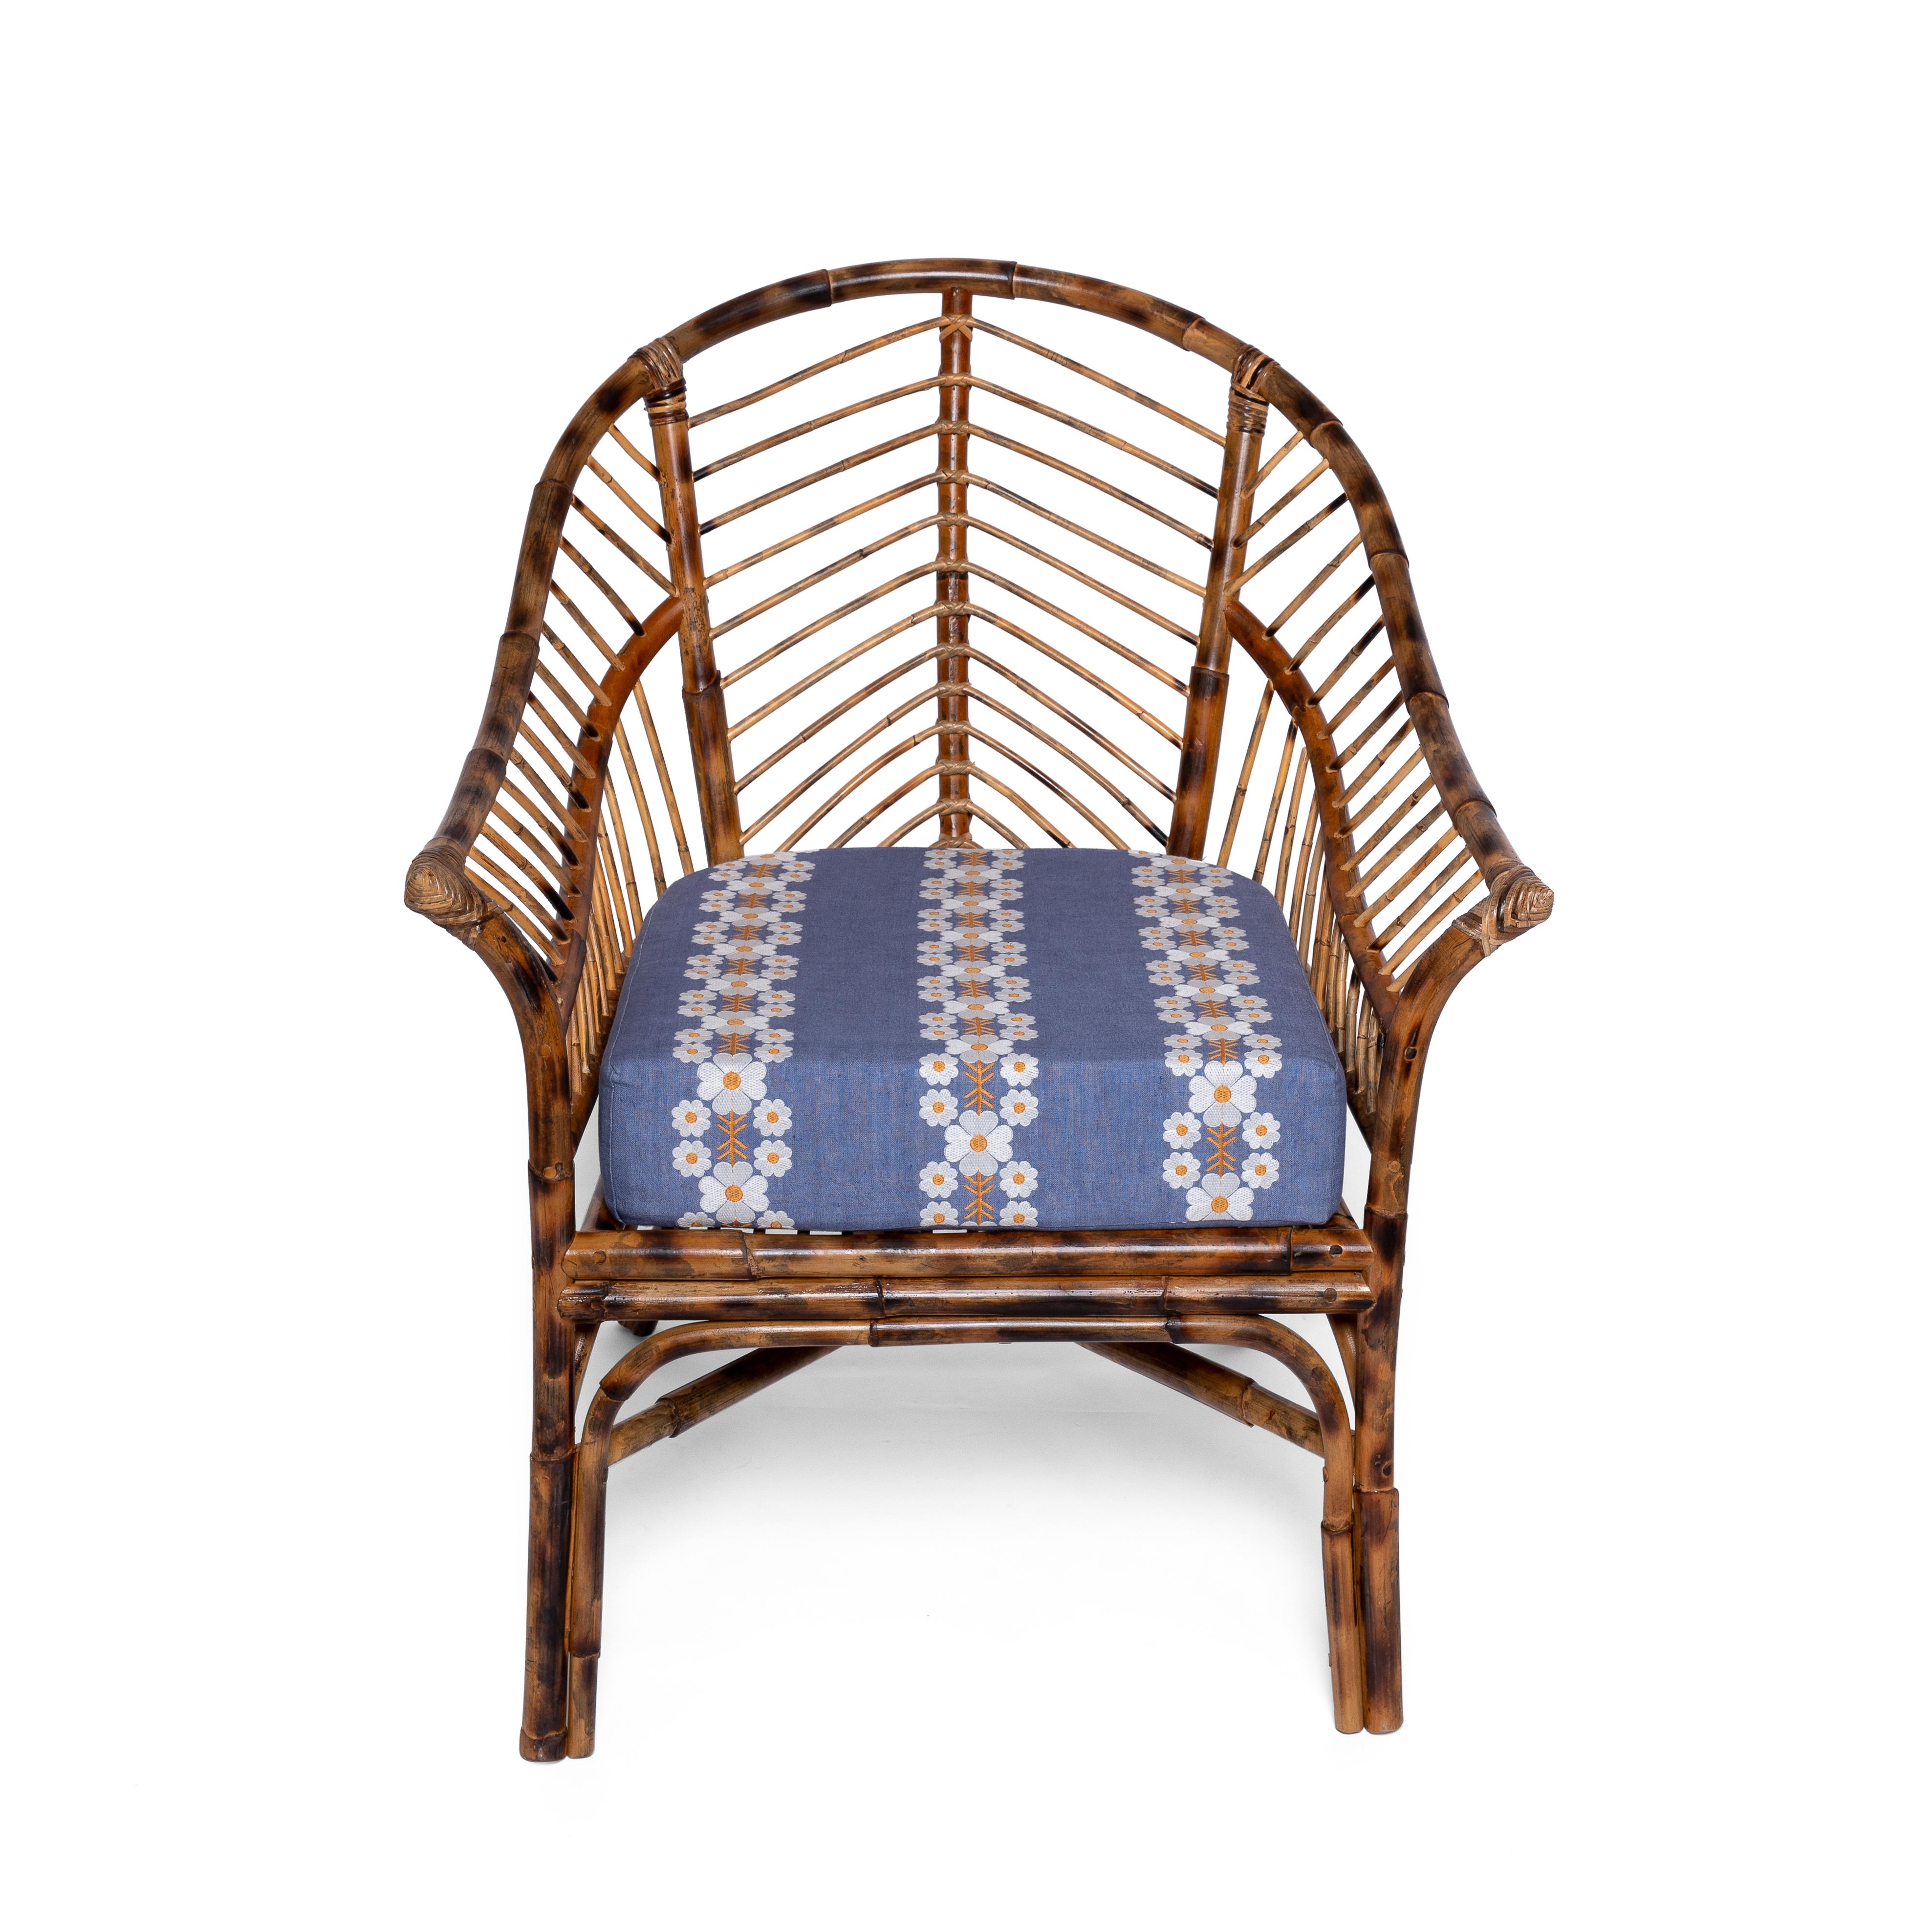 Contemporary Bamboo Chair Natural Rattan, Blue Cushion, Modern, by Sharland England